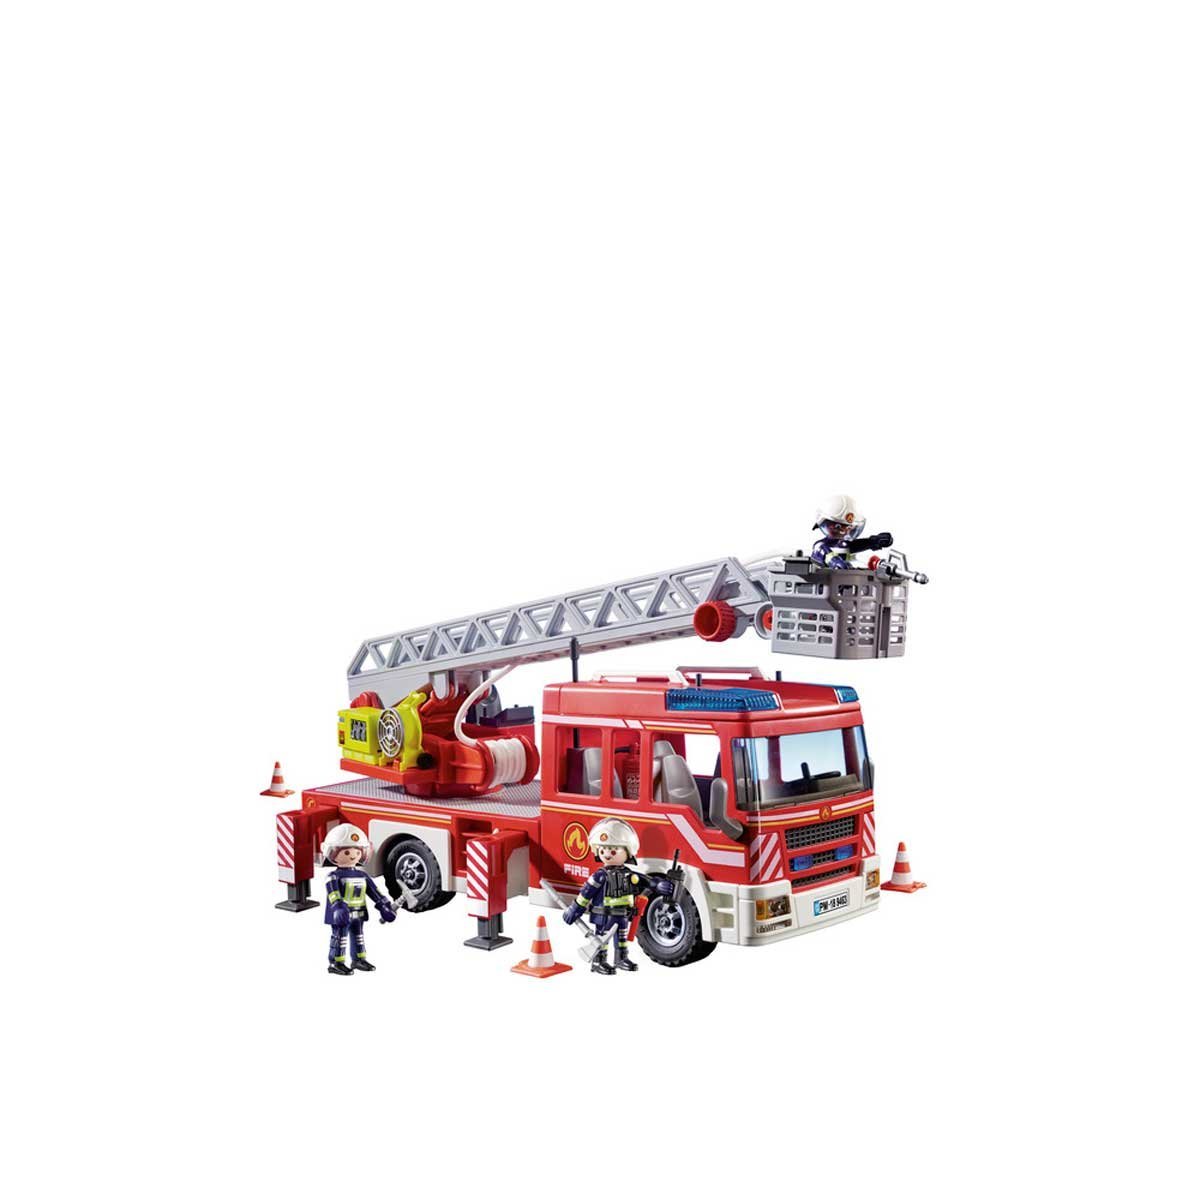 Camión de Bomberos con Escalera Playmobil